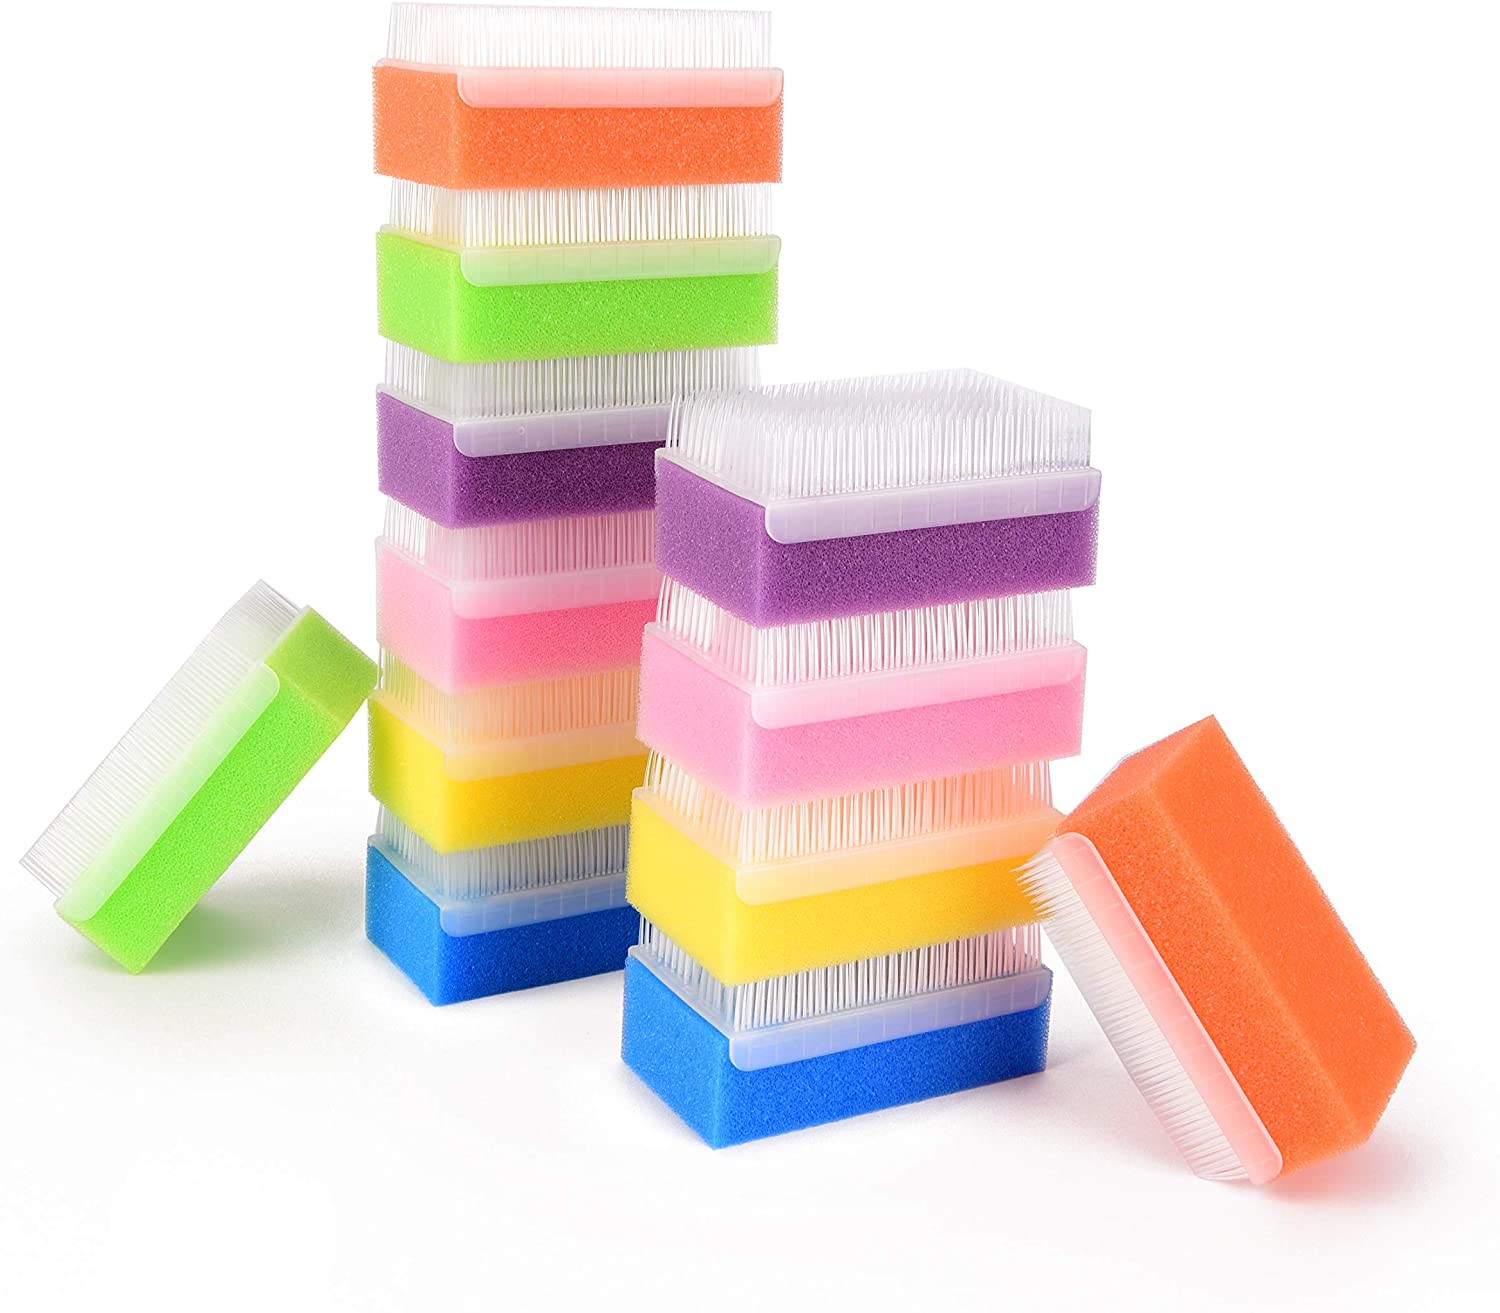 Baby Bath Sponge (12-Pack) Soft Foam Scrubber with Cradle Cap